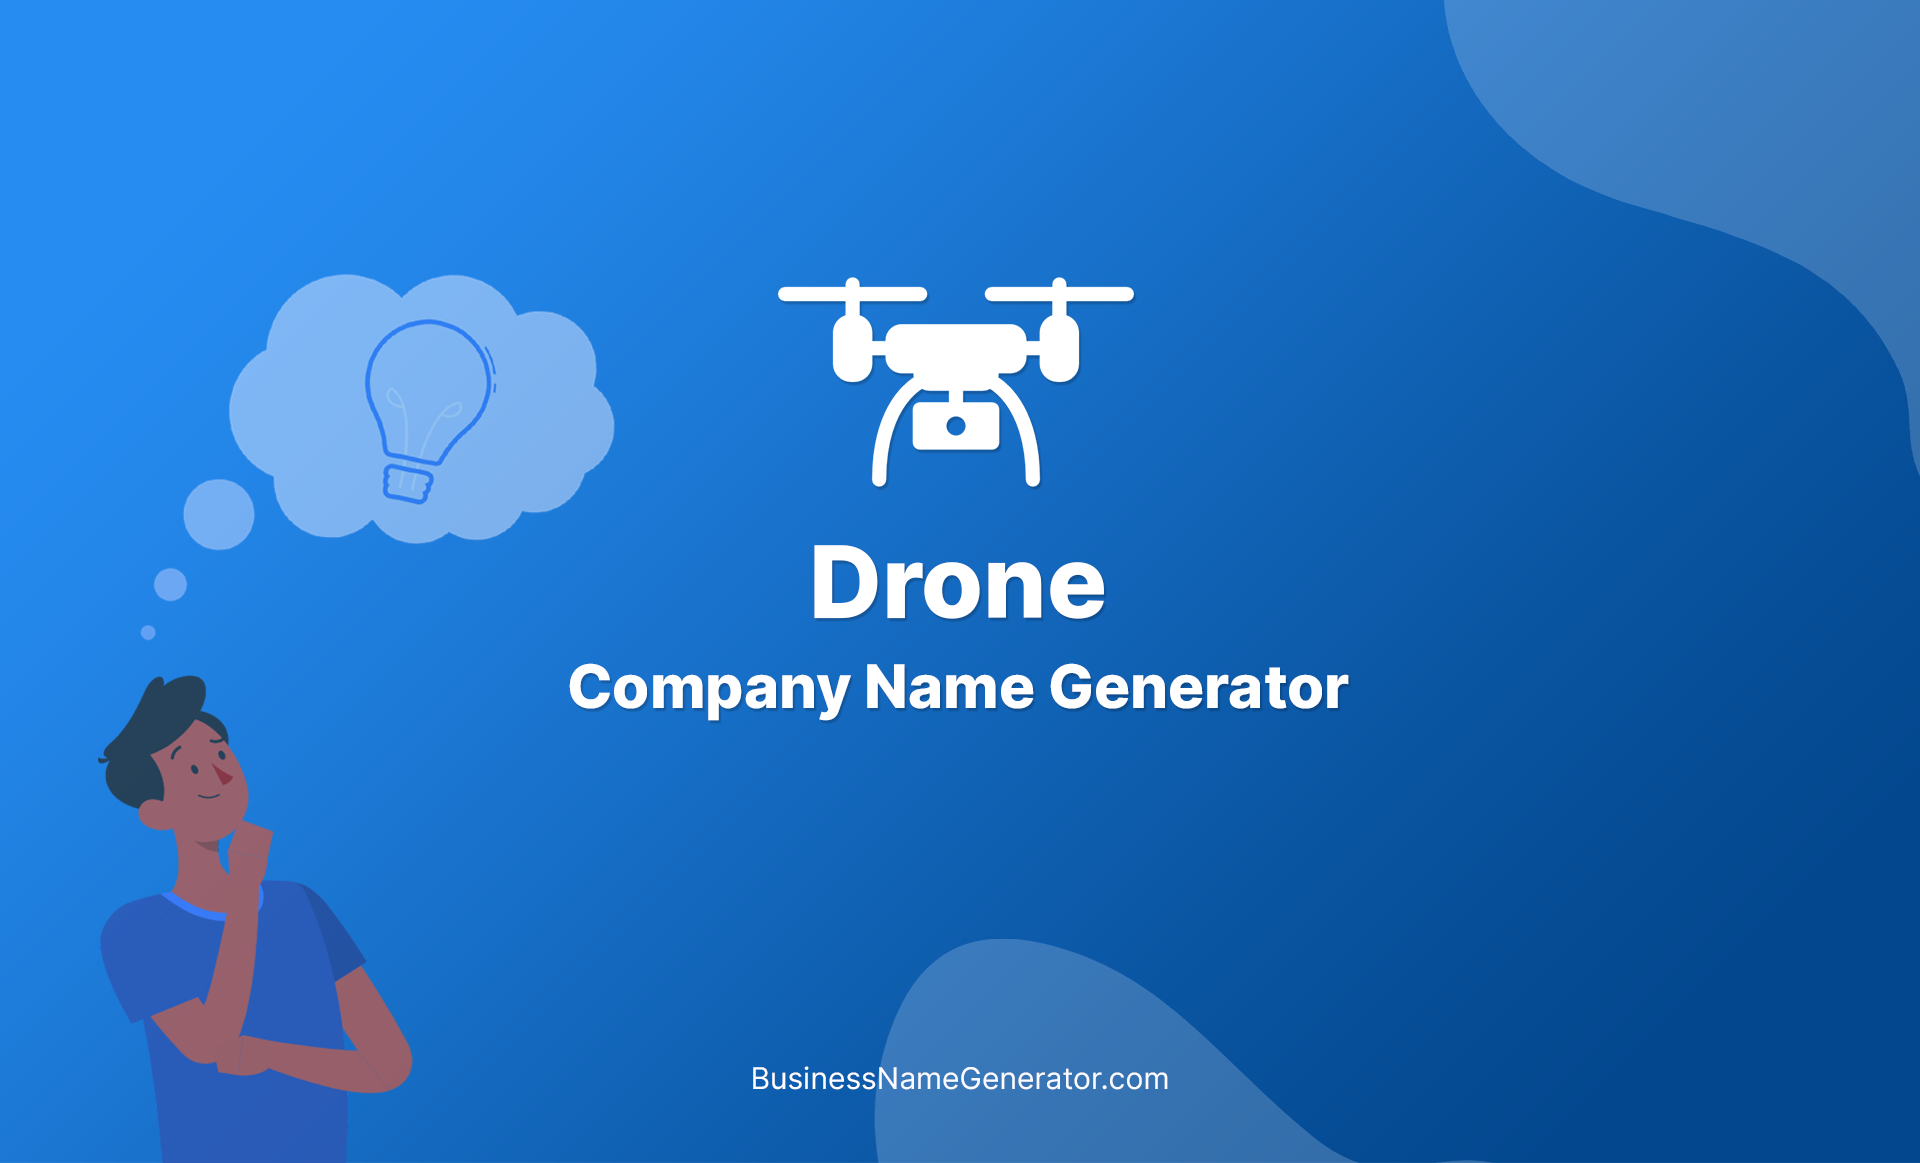 Drone Company Name Generator